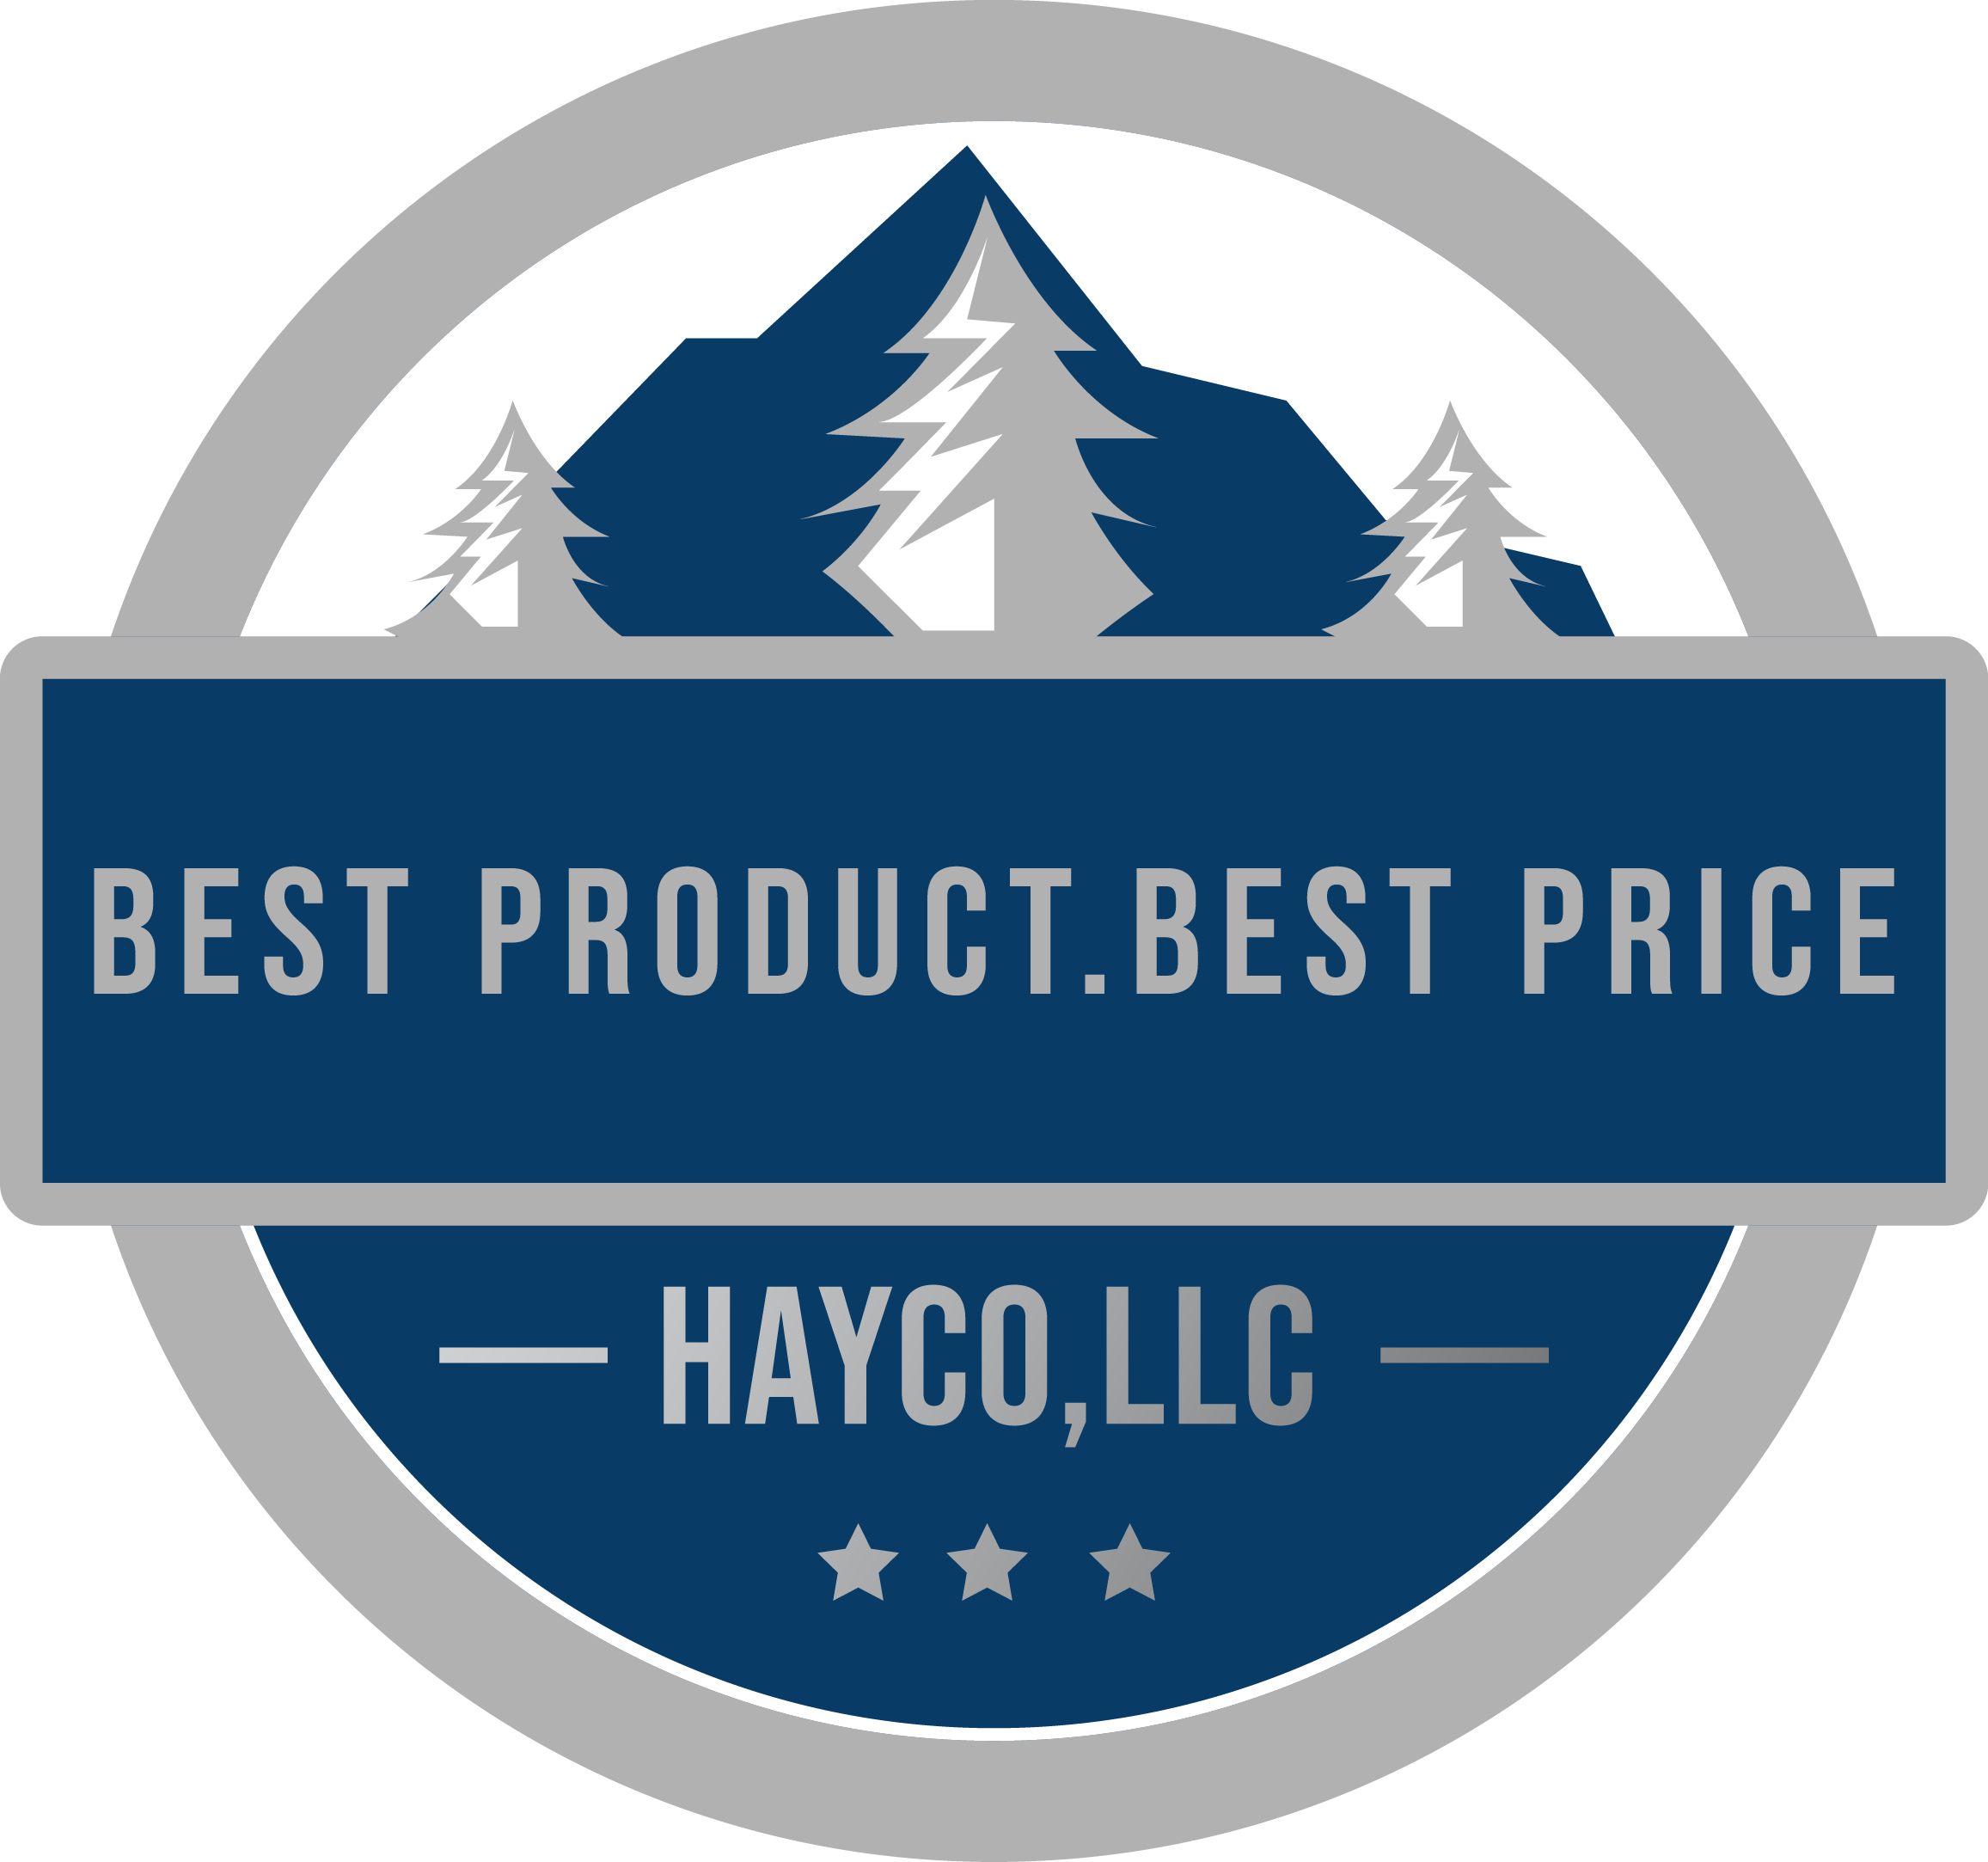 Hayco, LLC